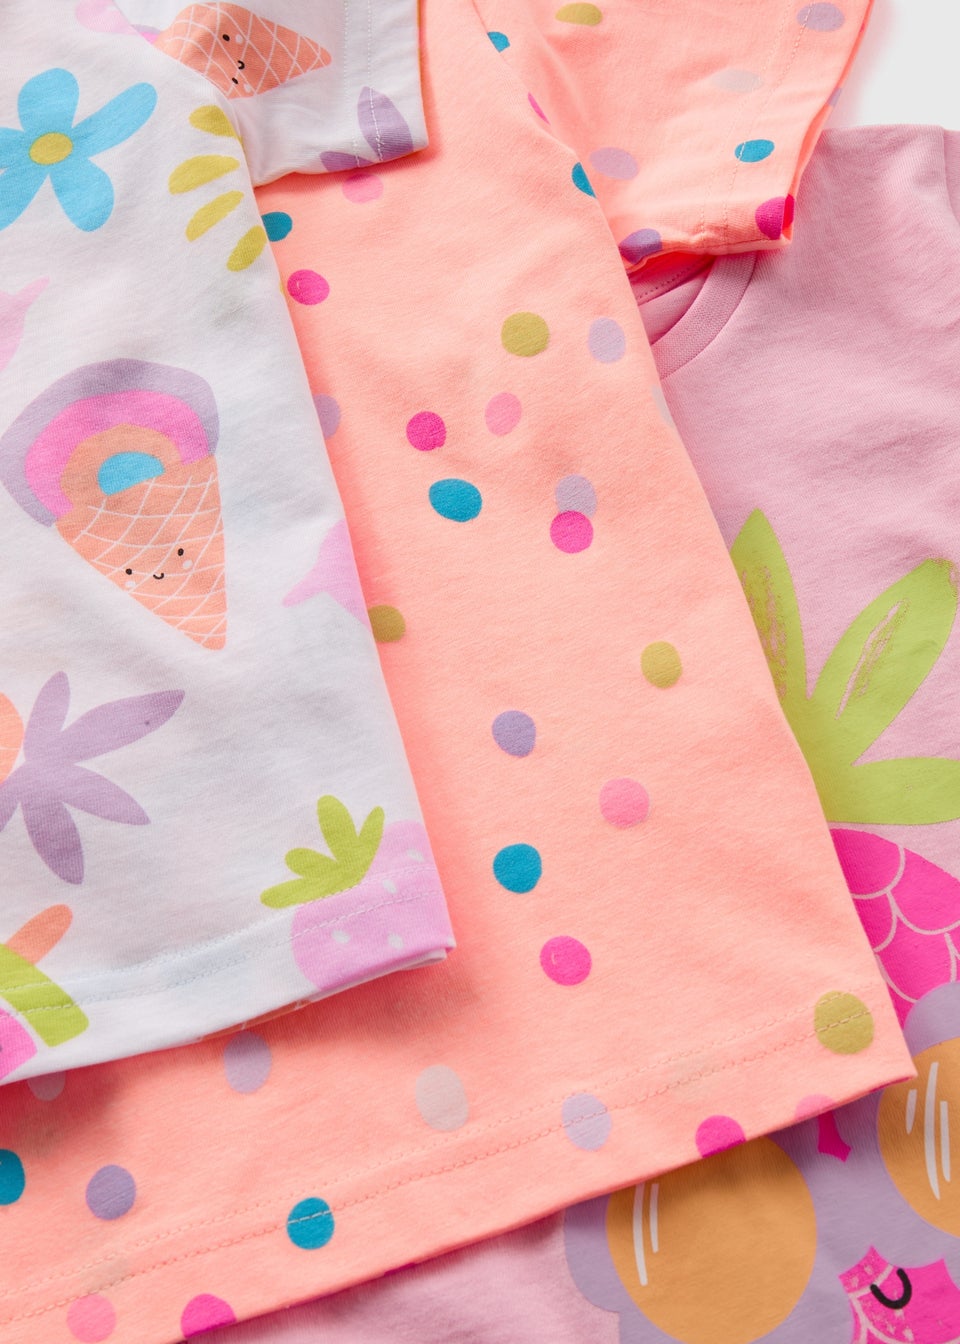 Girls 3 Pack Multicolour Summer Pyjama Sets (9mths-5yrs)